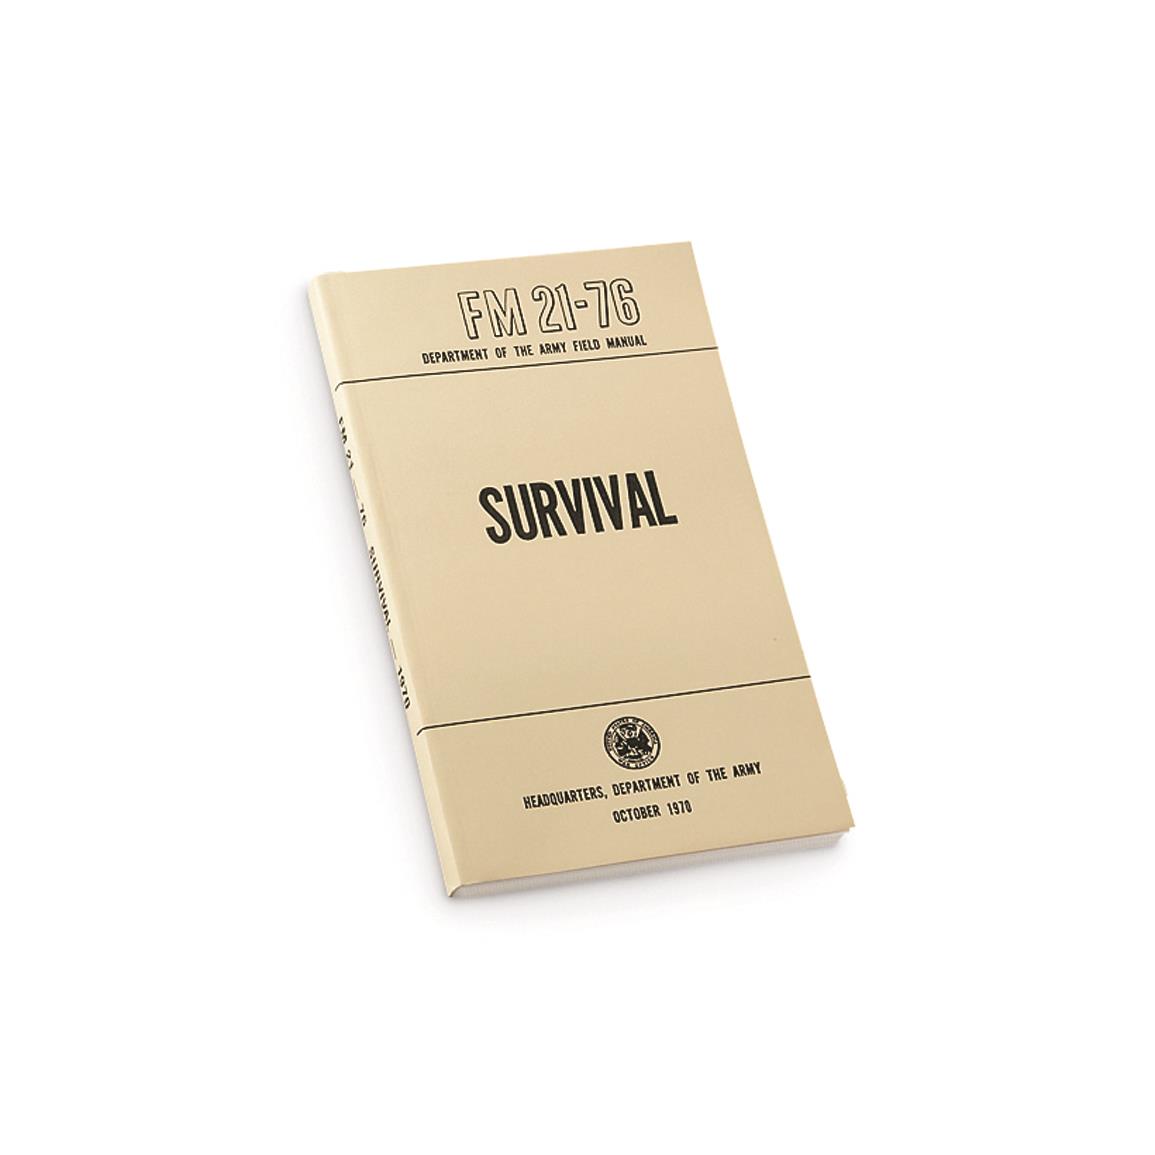 New U.S. Military Surplus Technical Manual on Survival